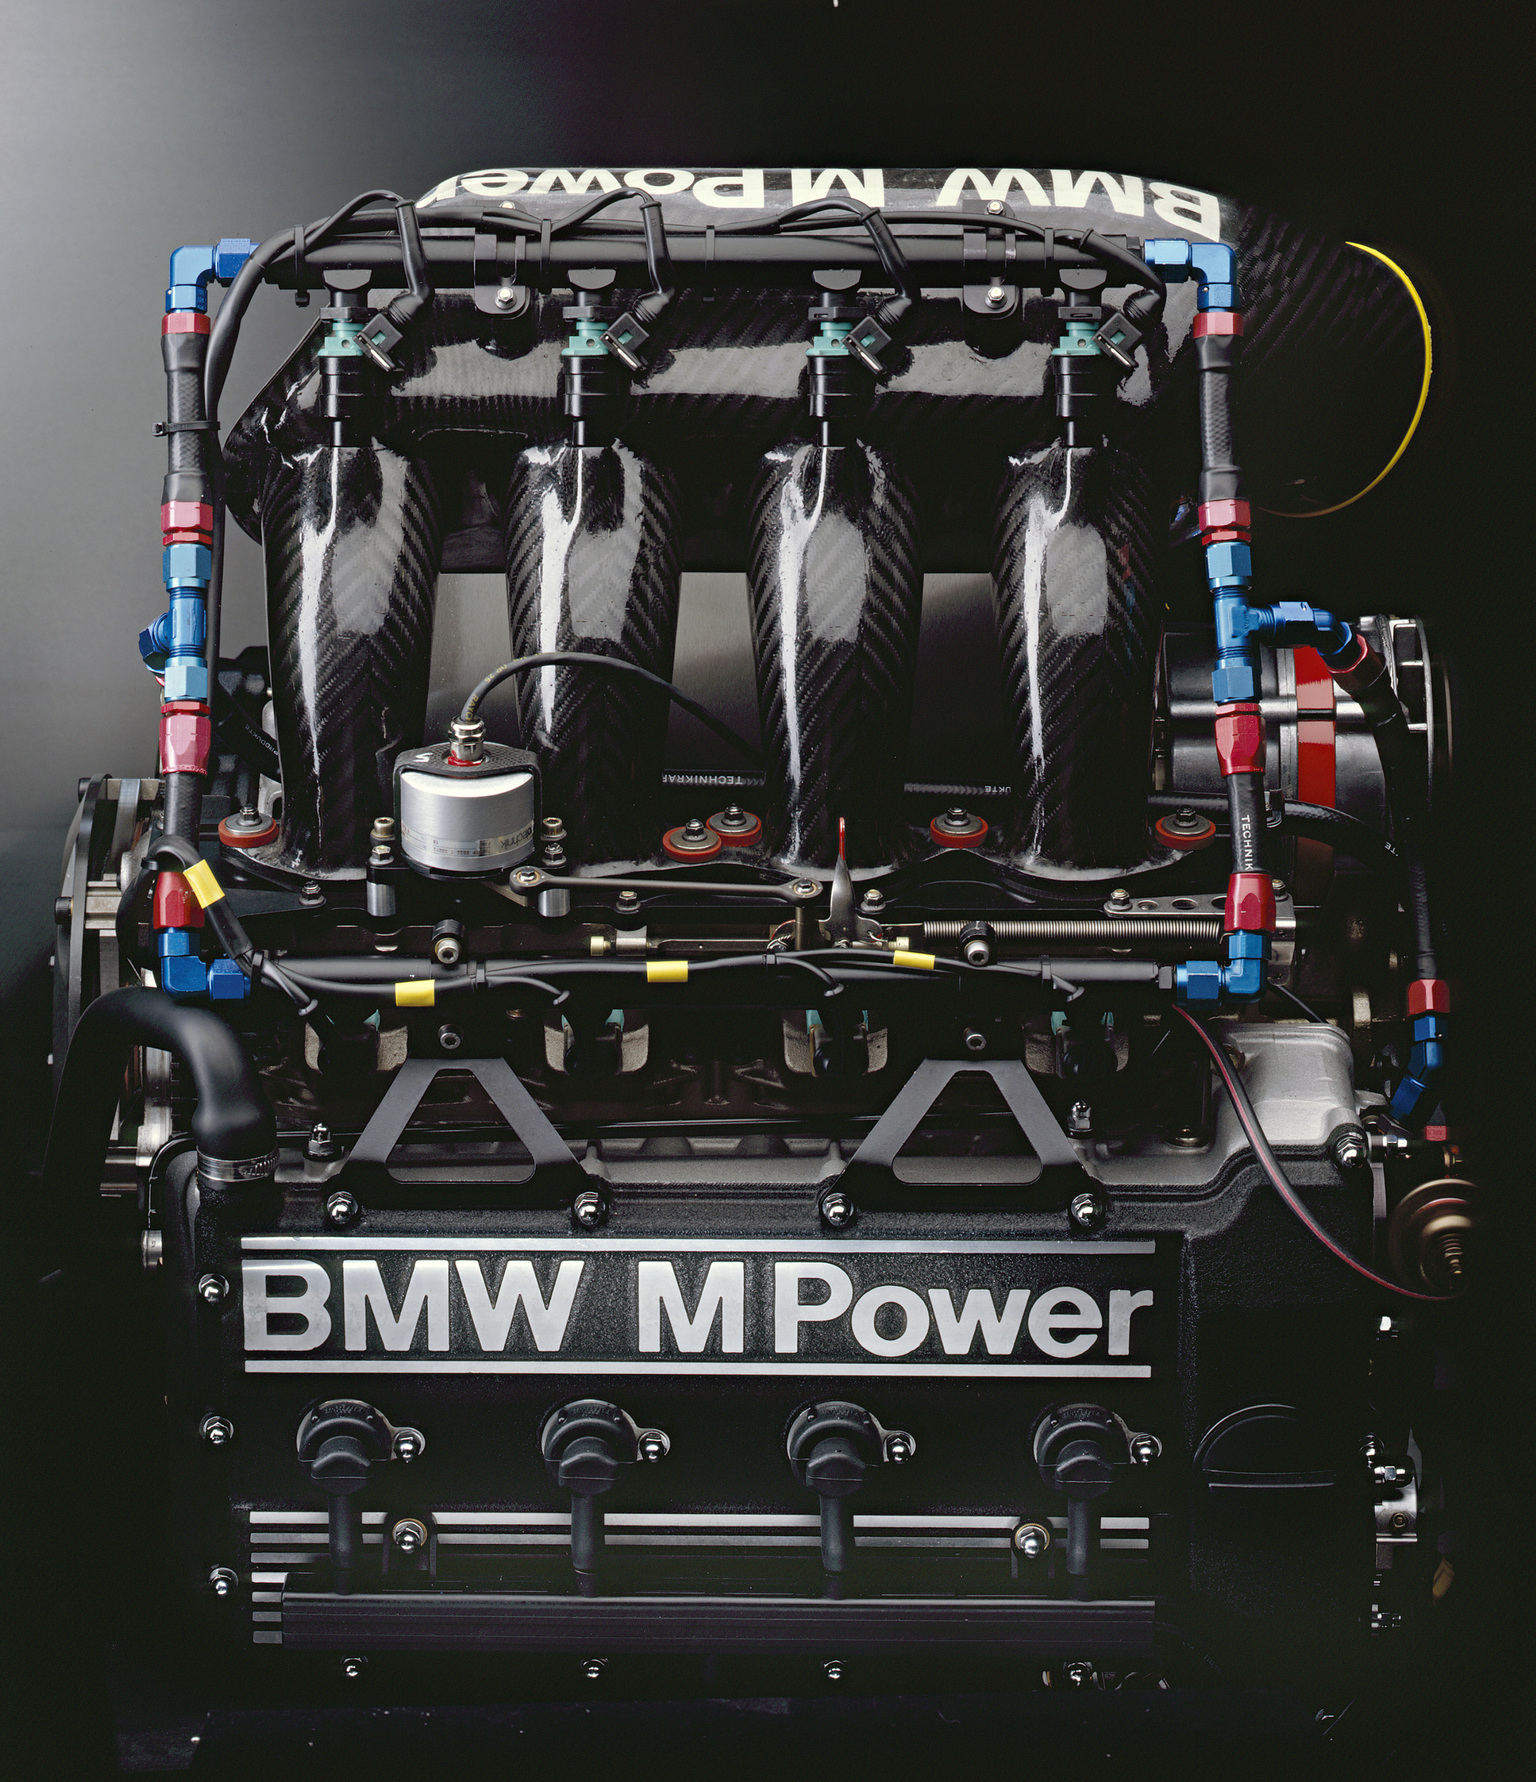 1990 BMW M3 Group A